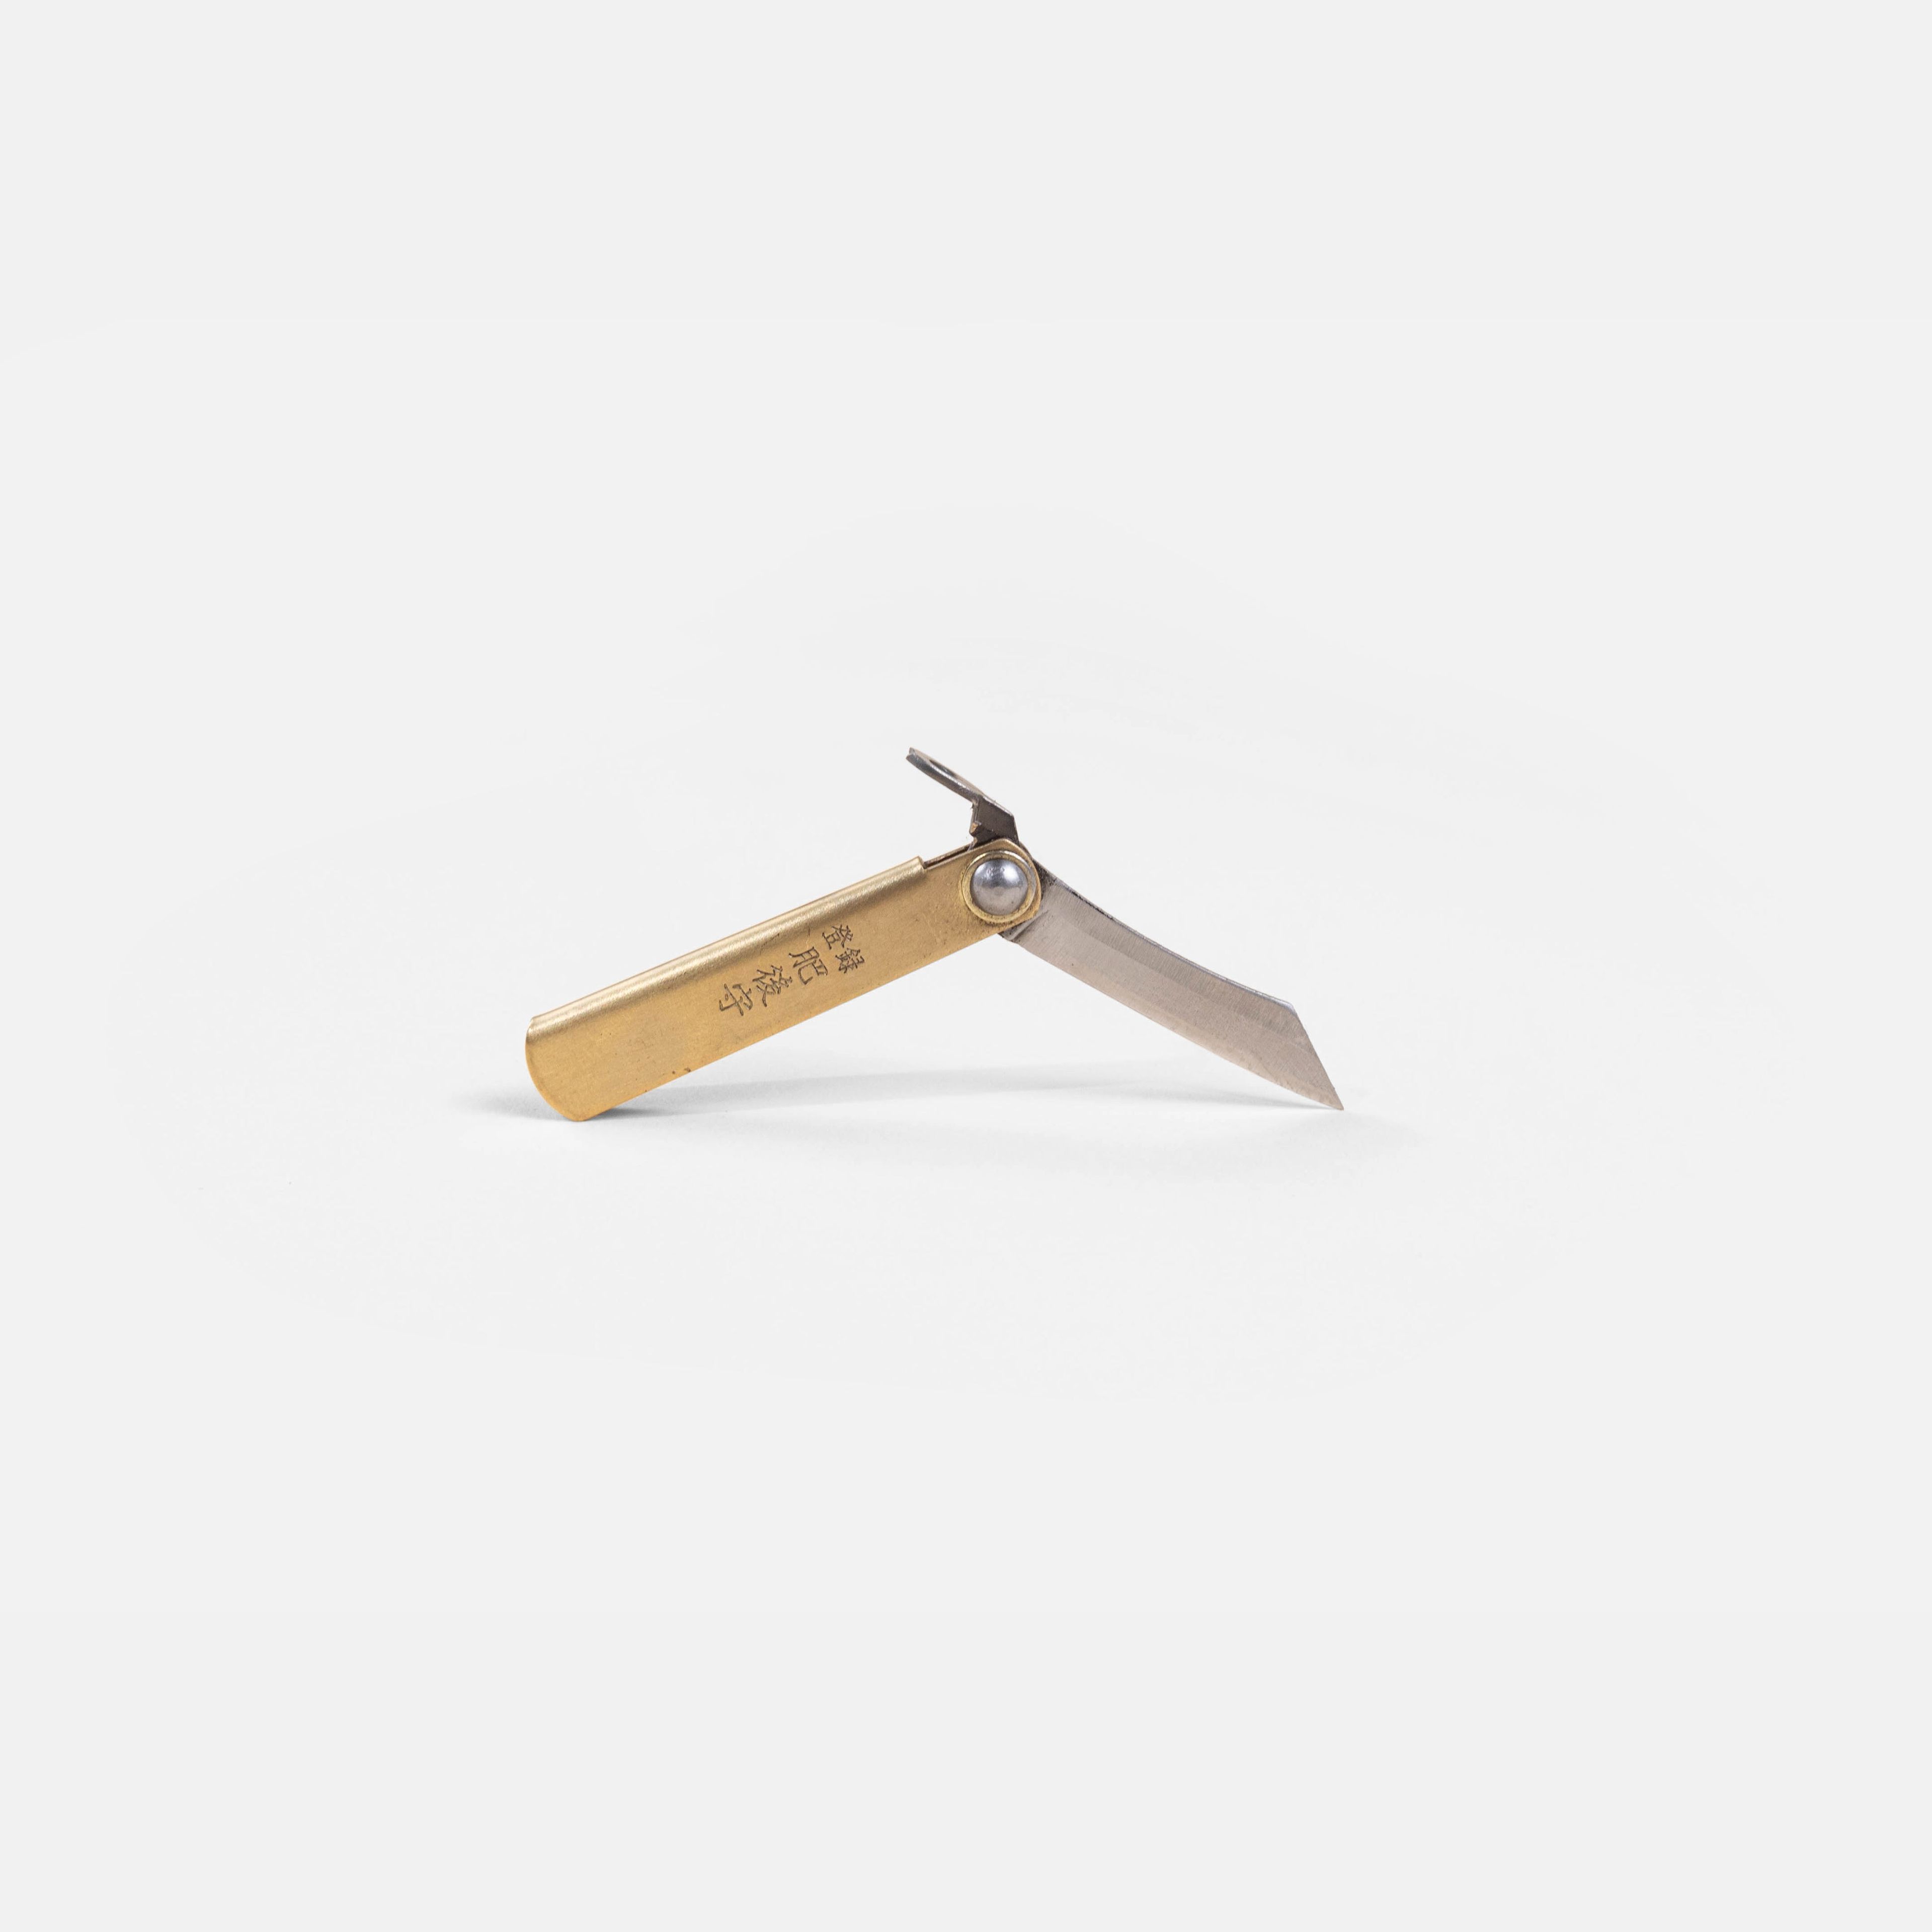 Small Japanese Folding Knife in Brass